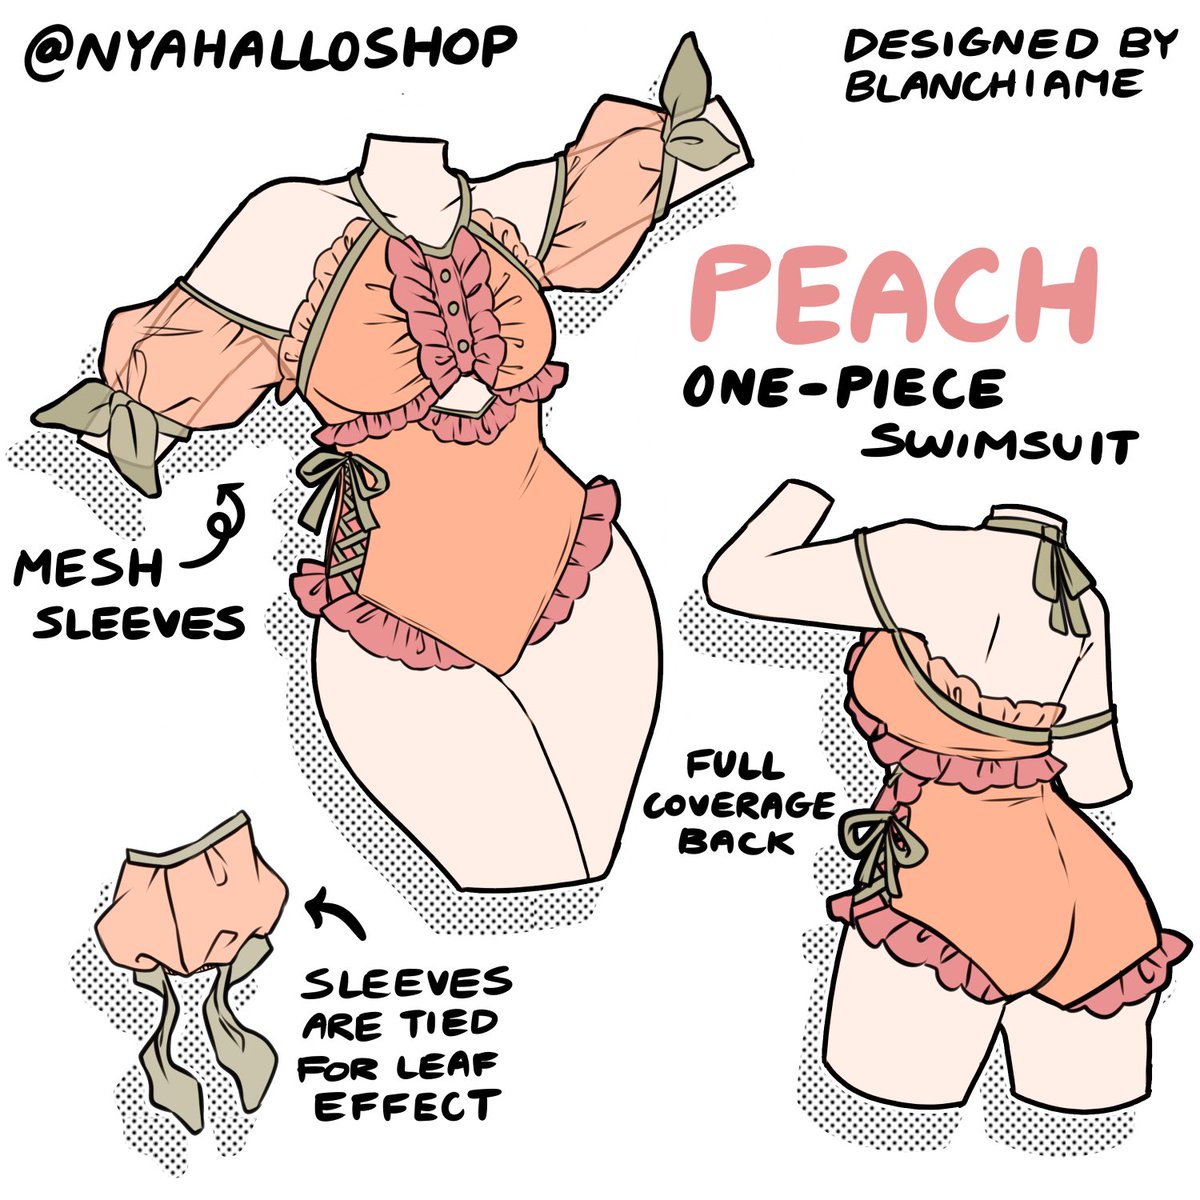 Peach swimsuit 🍑